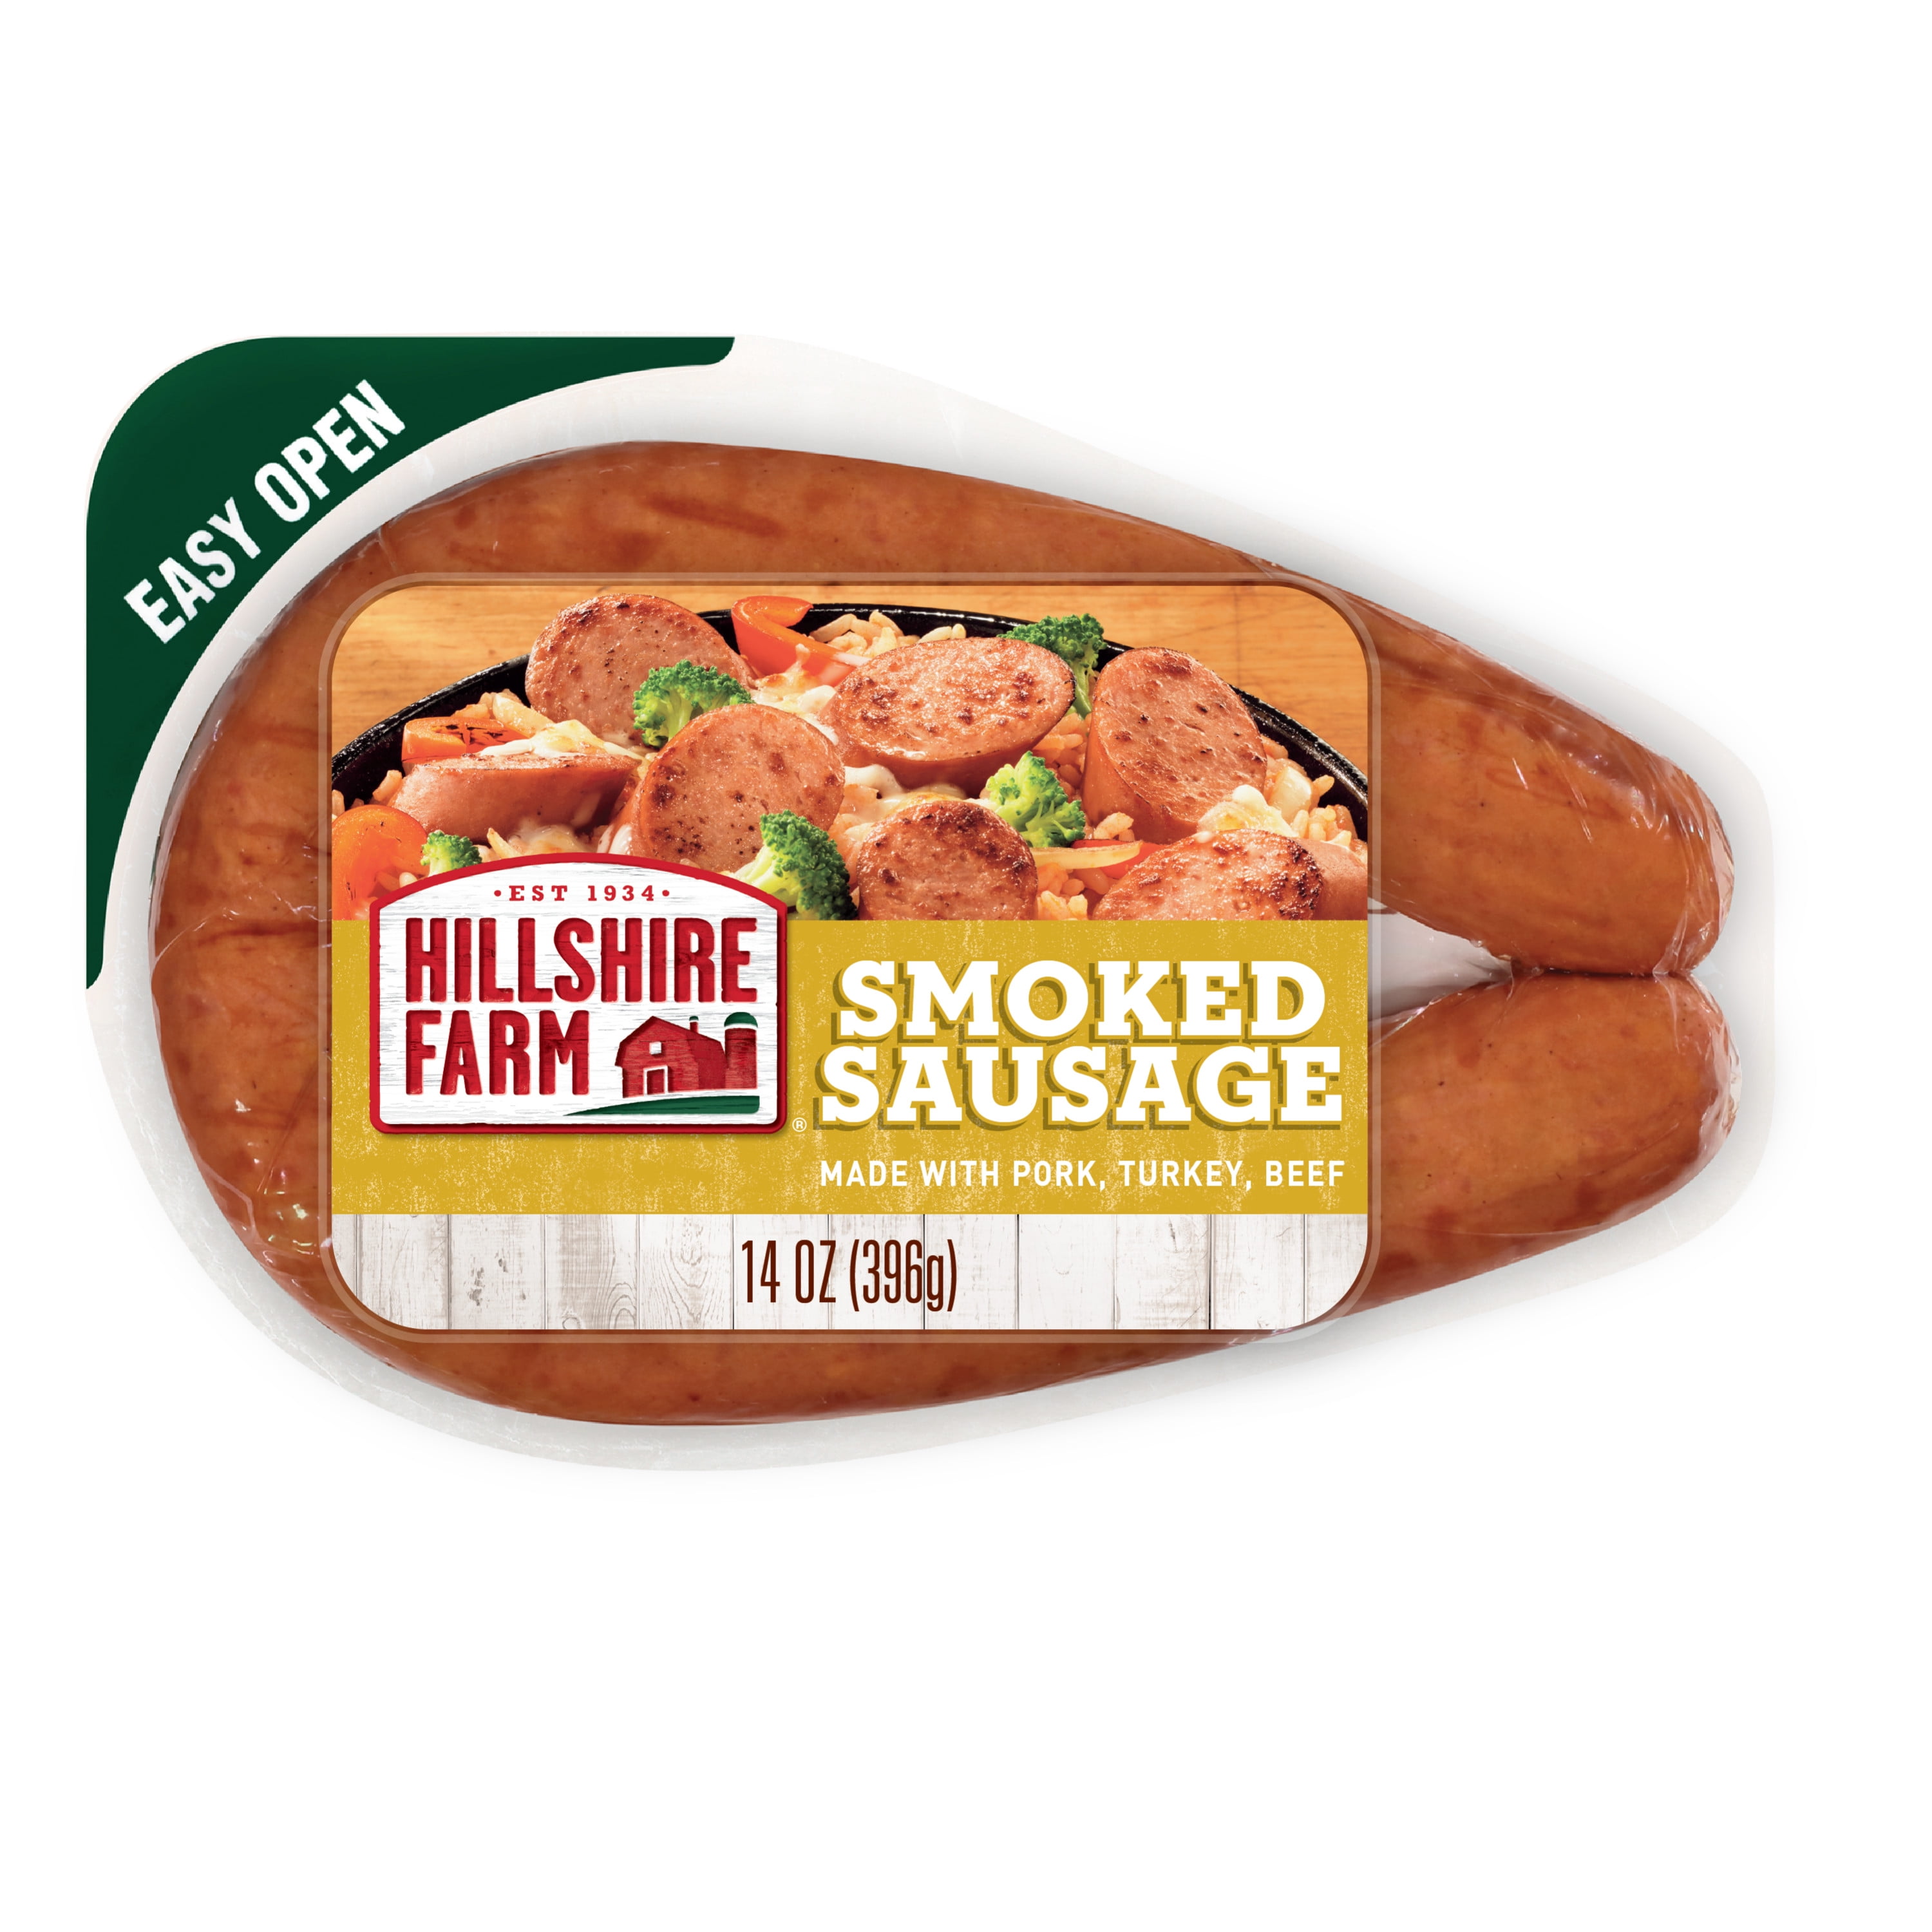 Hillshire Farm Smoked Sausage made with Pork Turkey and Beef, 14 oz